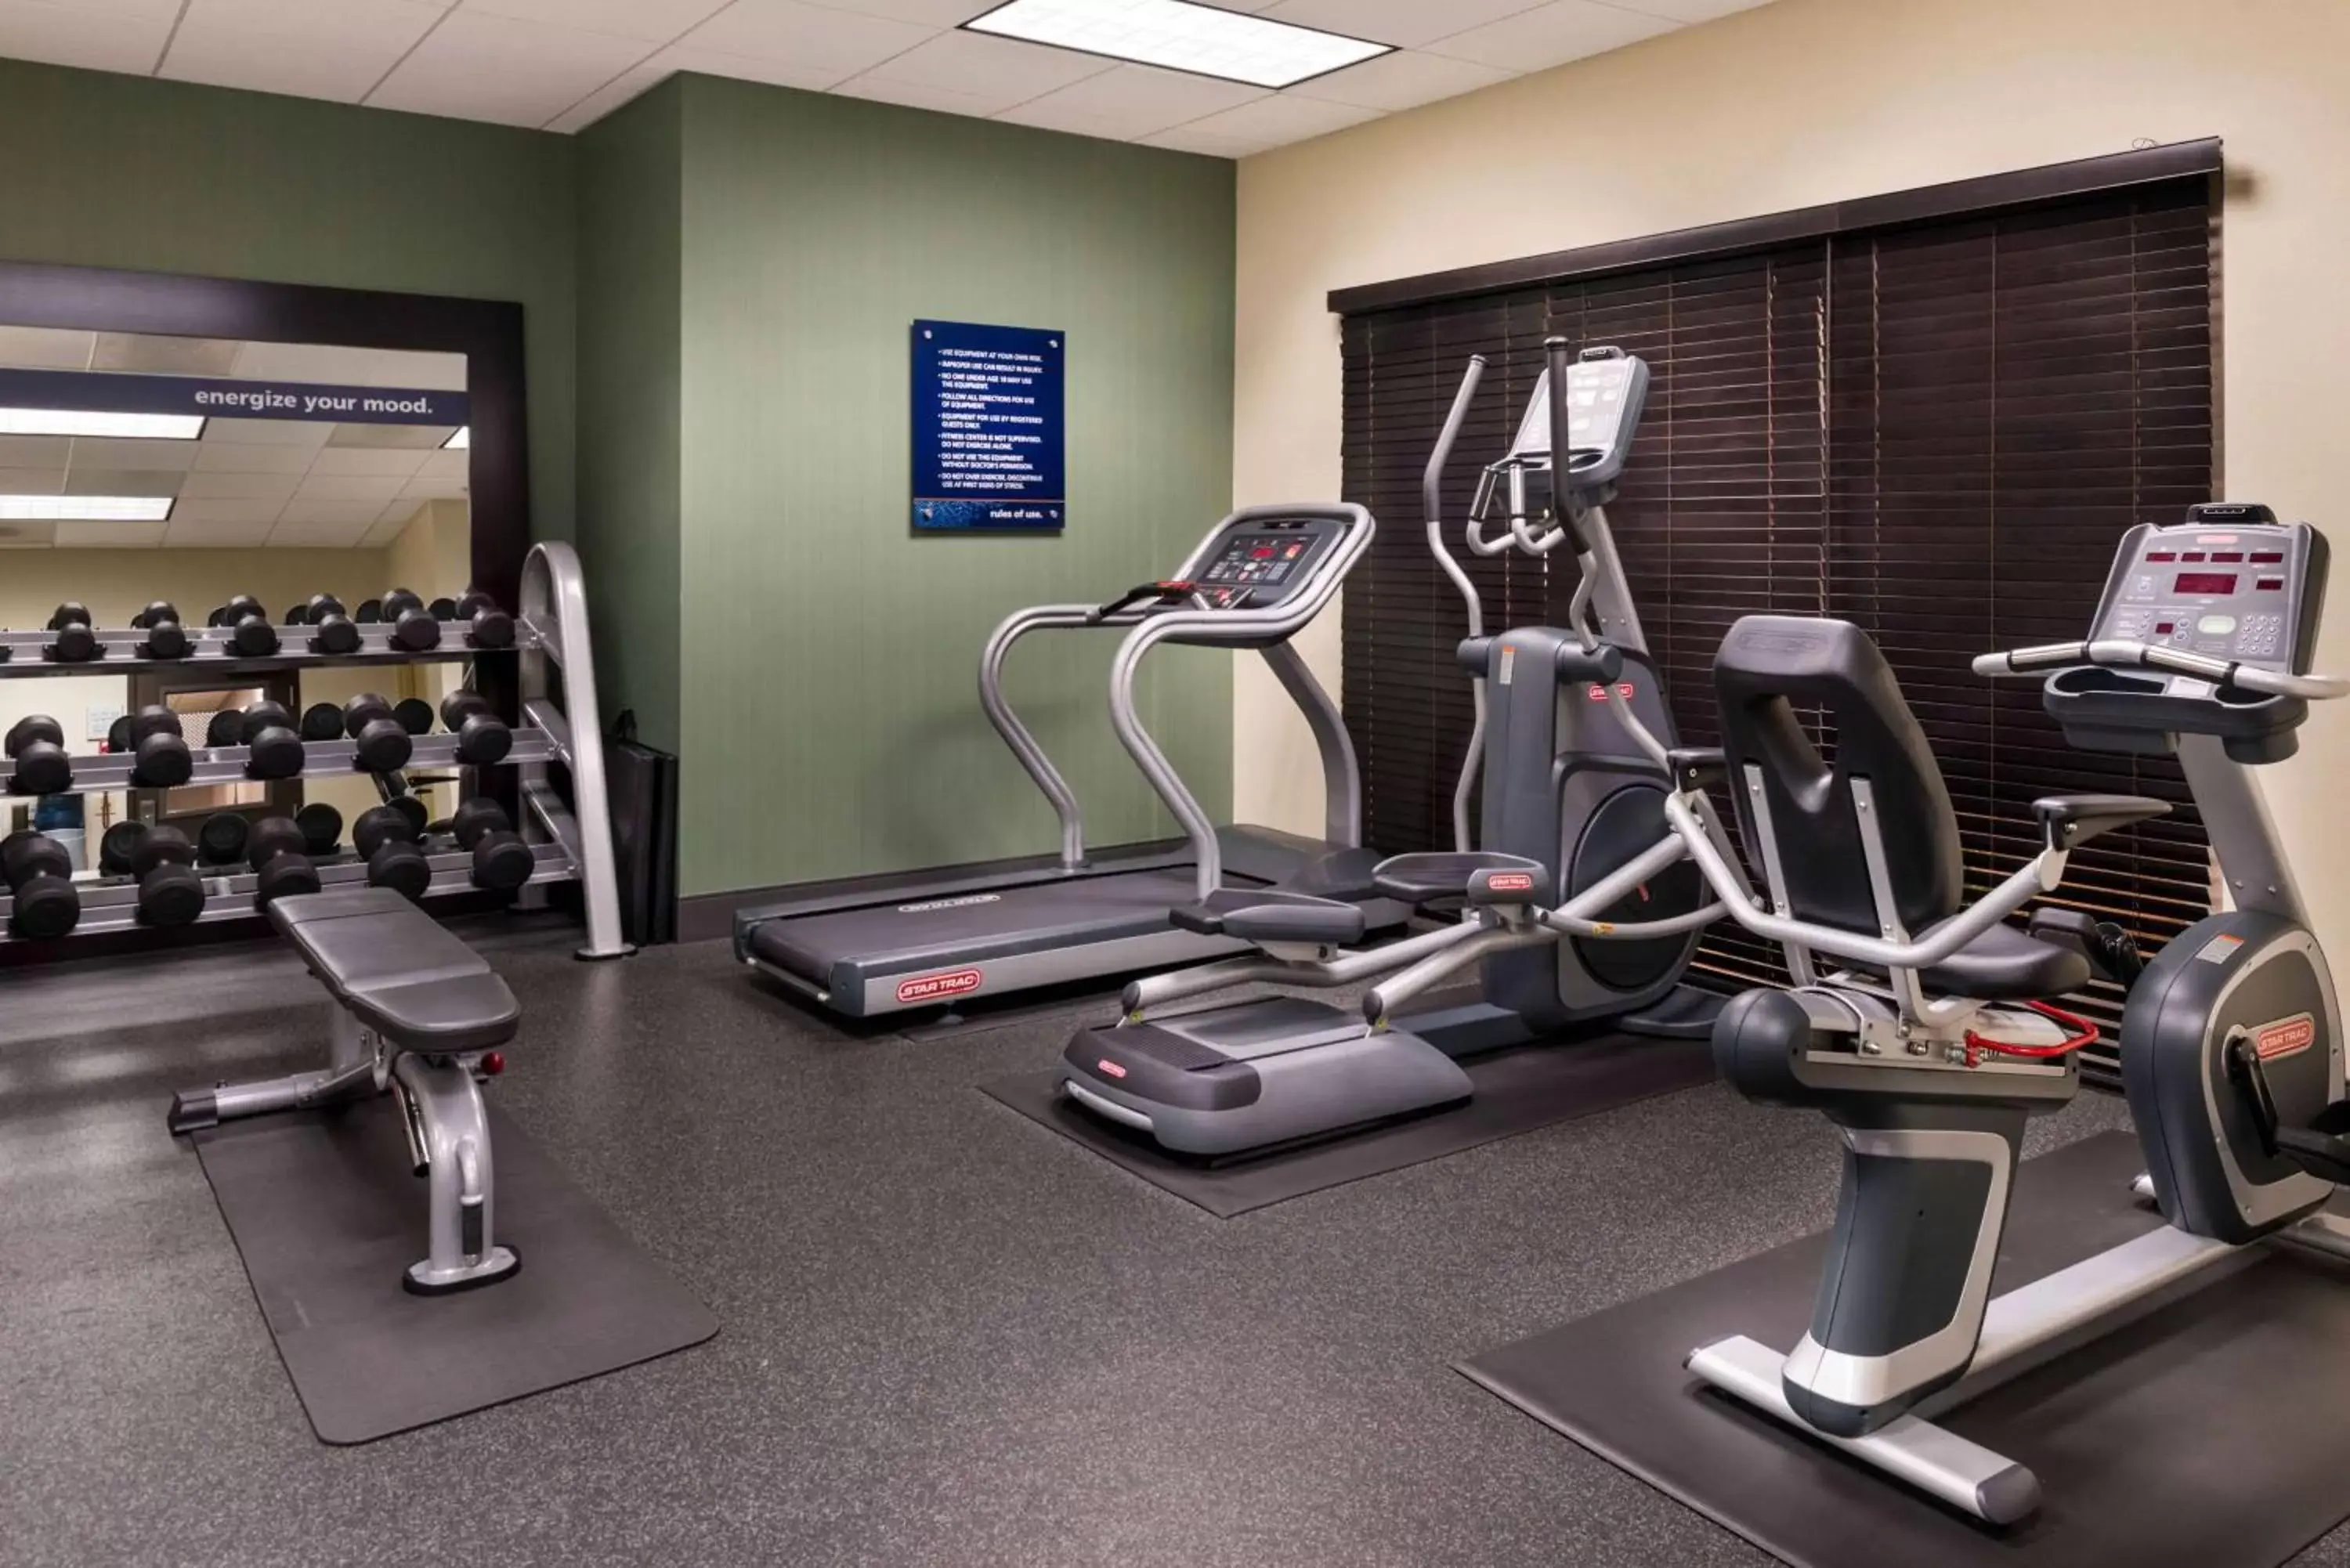 Fitness centre/facilities, Fitness Center/Facilities in Hampton Inn Channel Islands Harbor